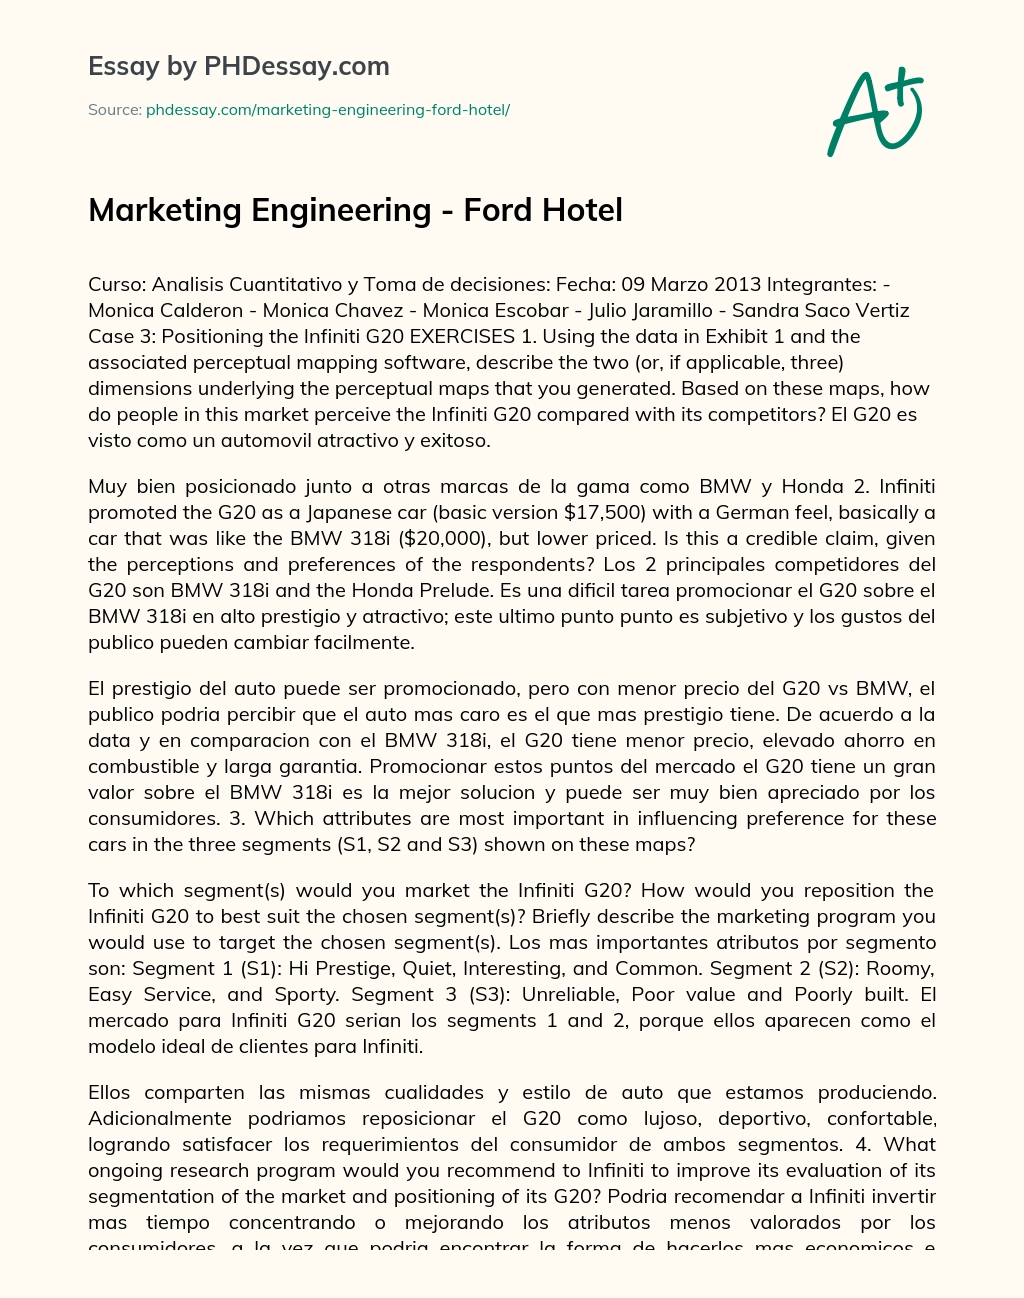 Marketing Engineering – Ford Hotel essay